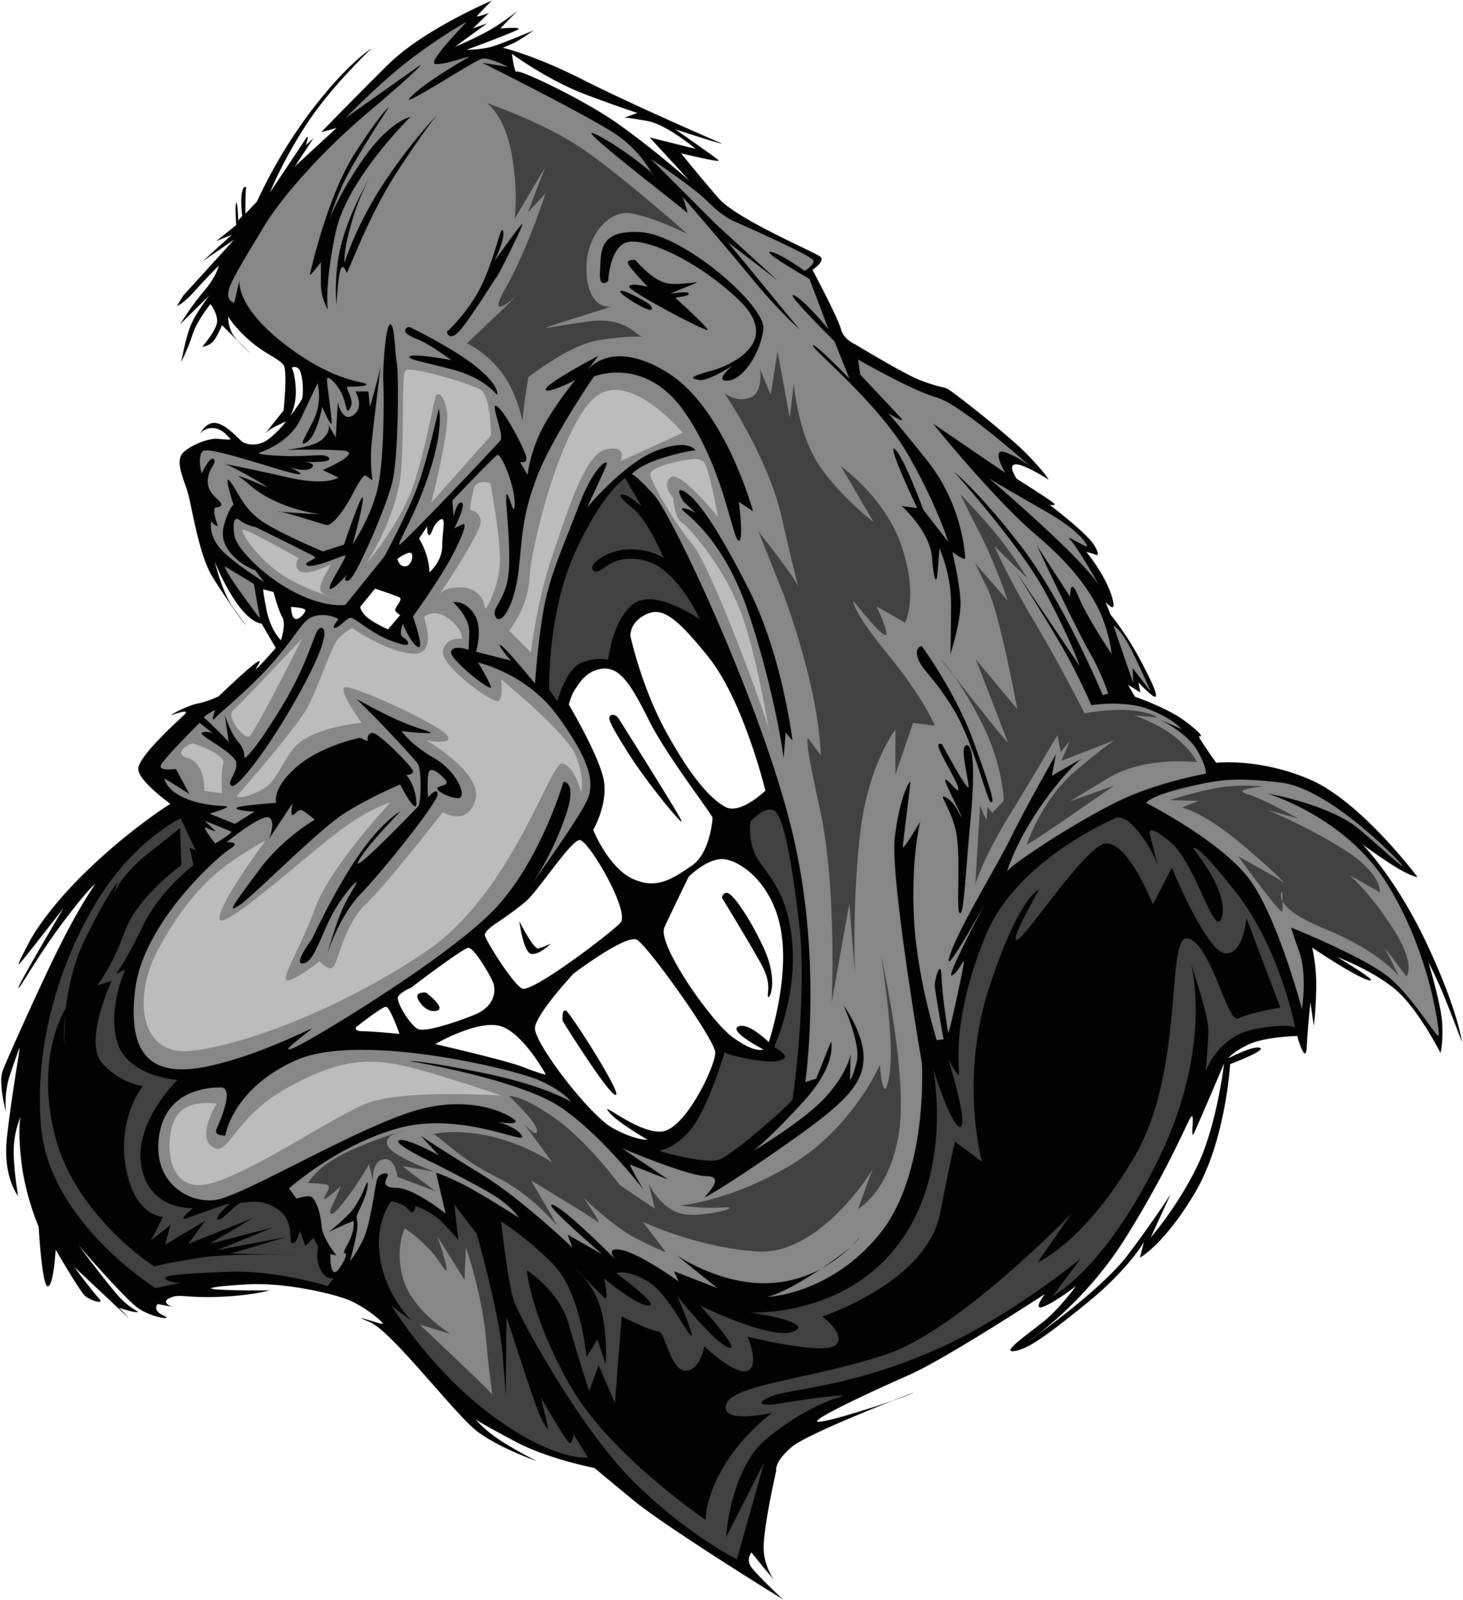 Cartoon Image of a Gorilla or Ape